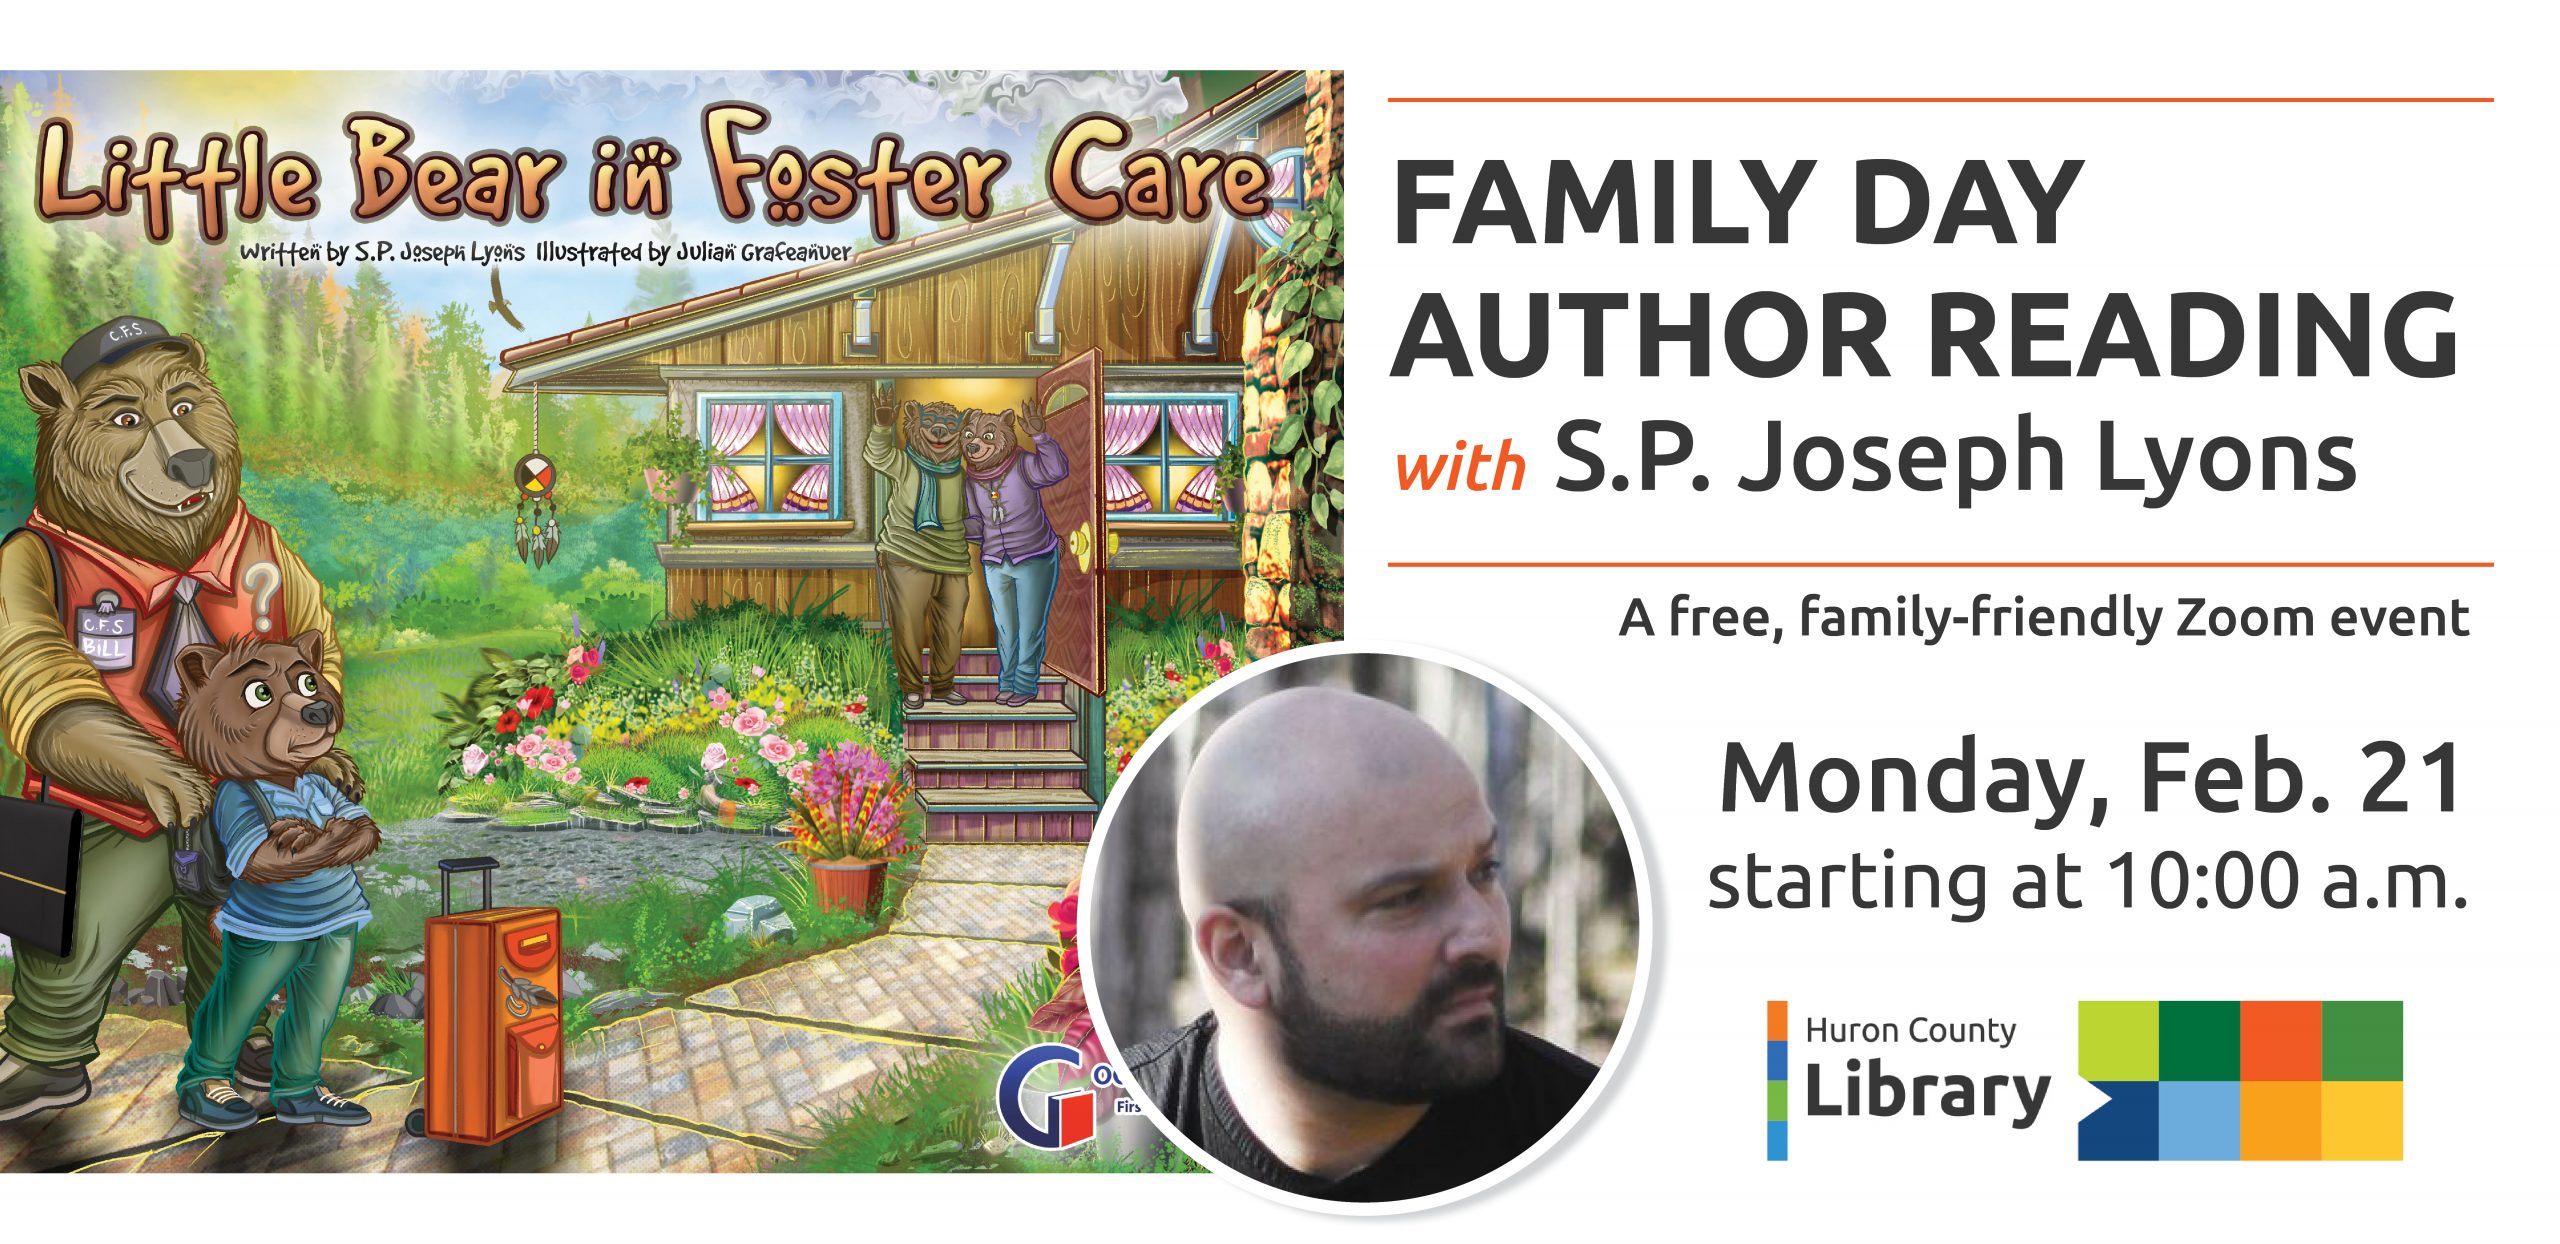 Family Day Author Reading with S.P. Joseph Lyons